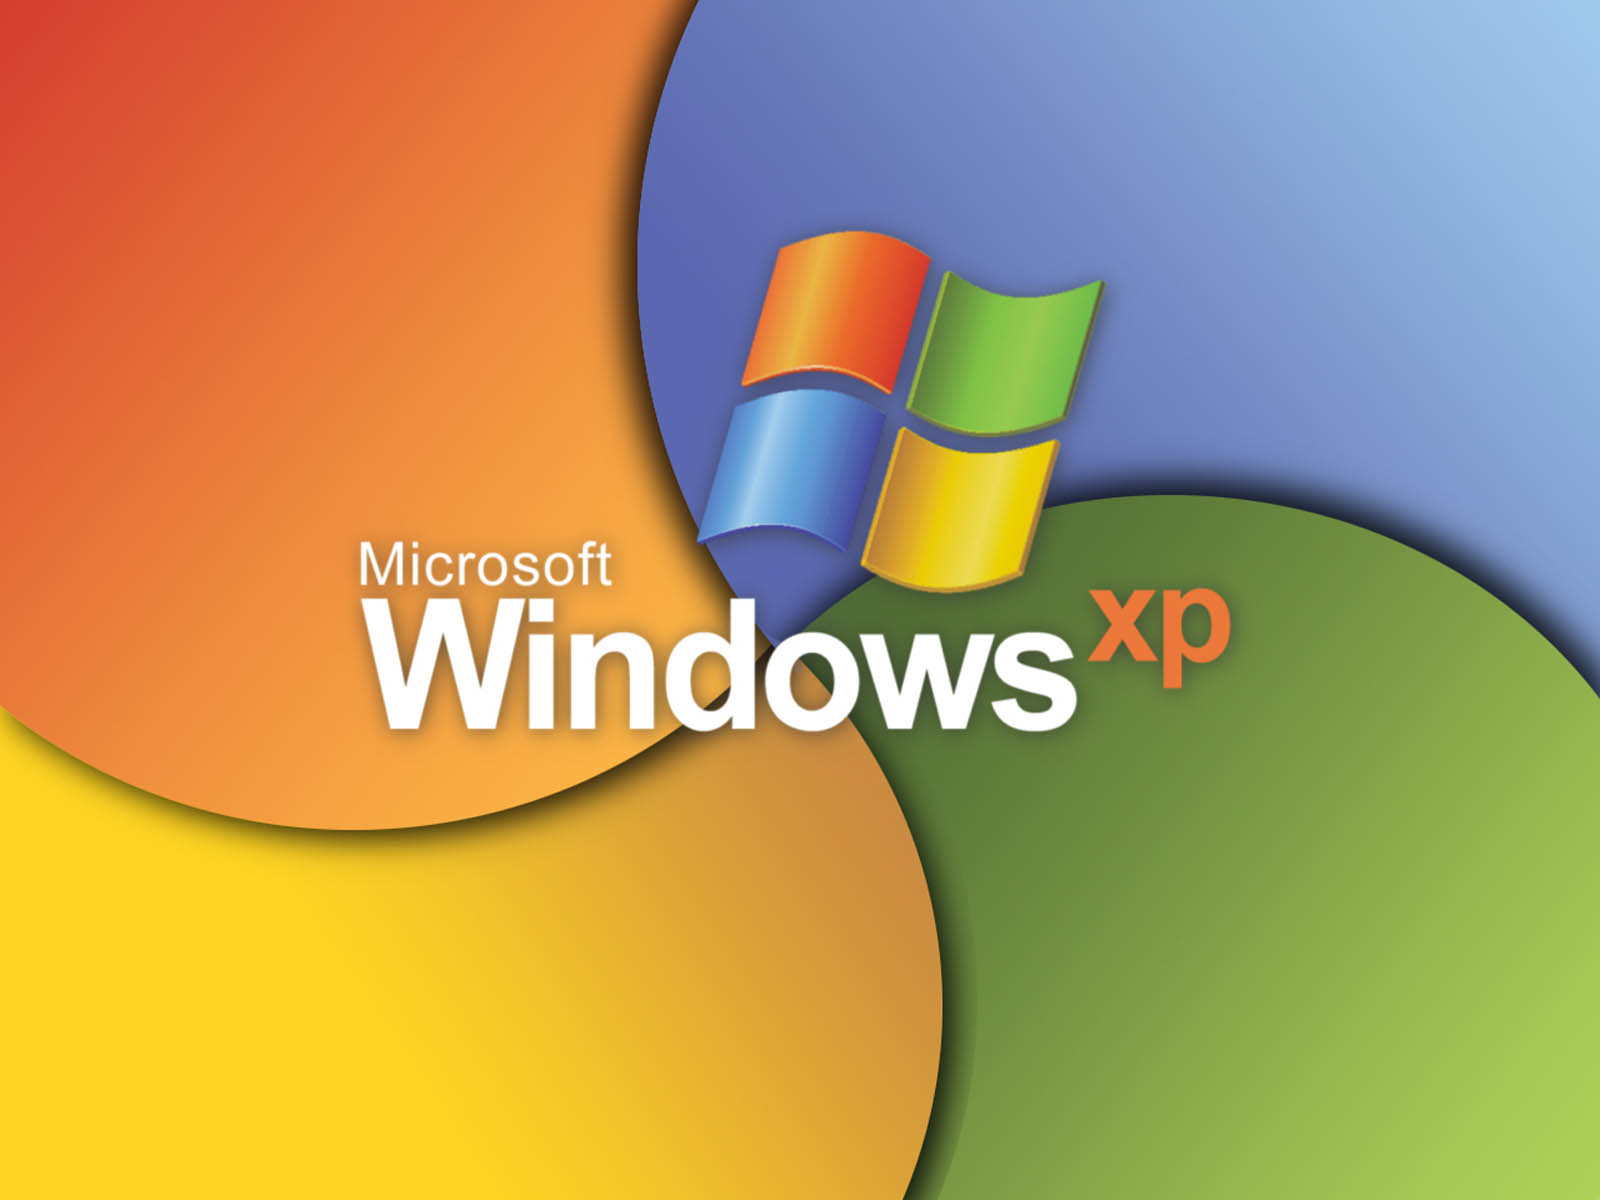 Windows Xp Desktop Wallpaper Image Photos Pictures And Background